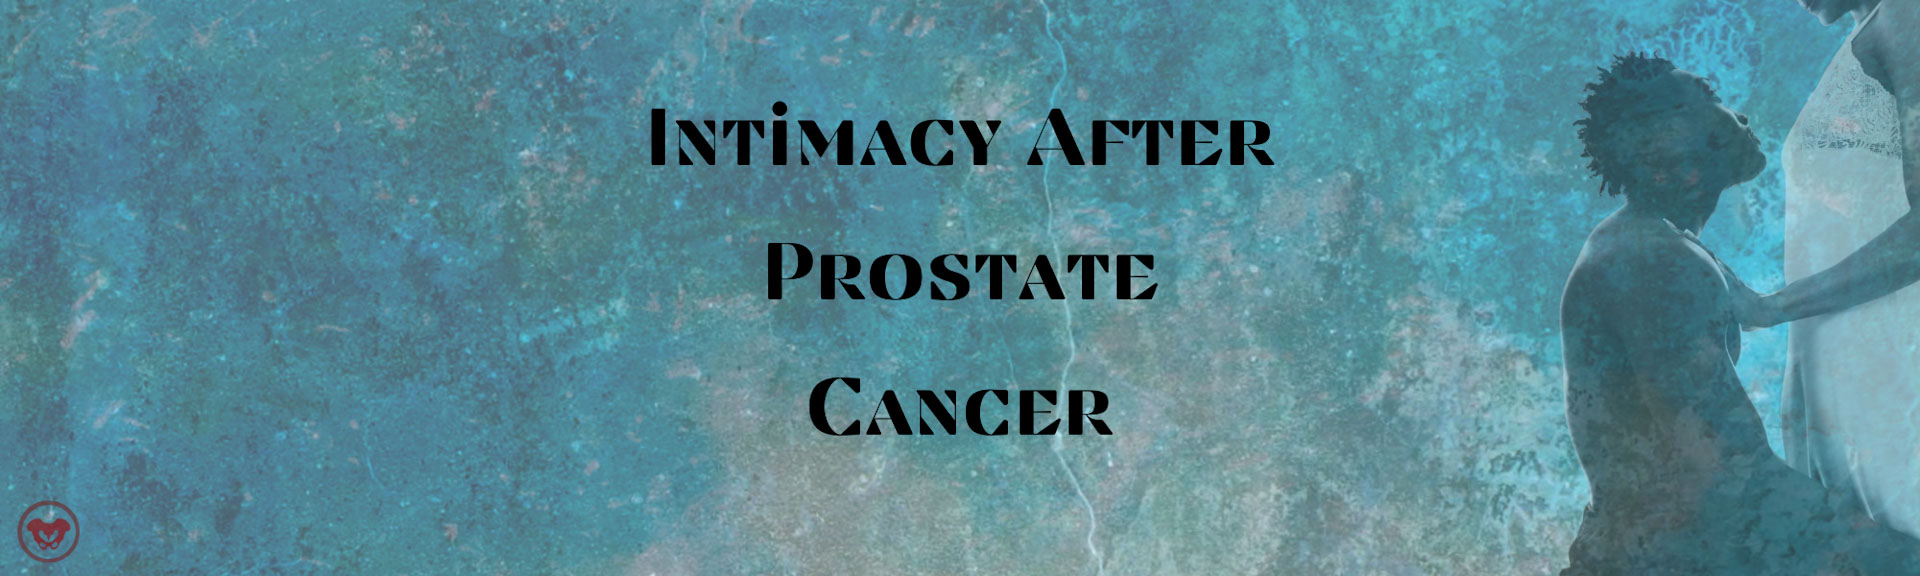 Intimacy After Prostate Cancer